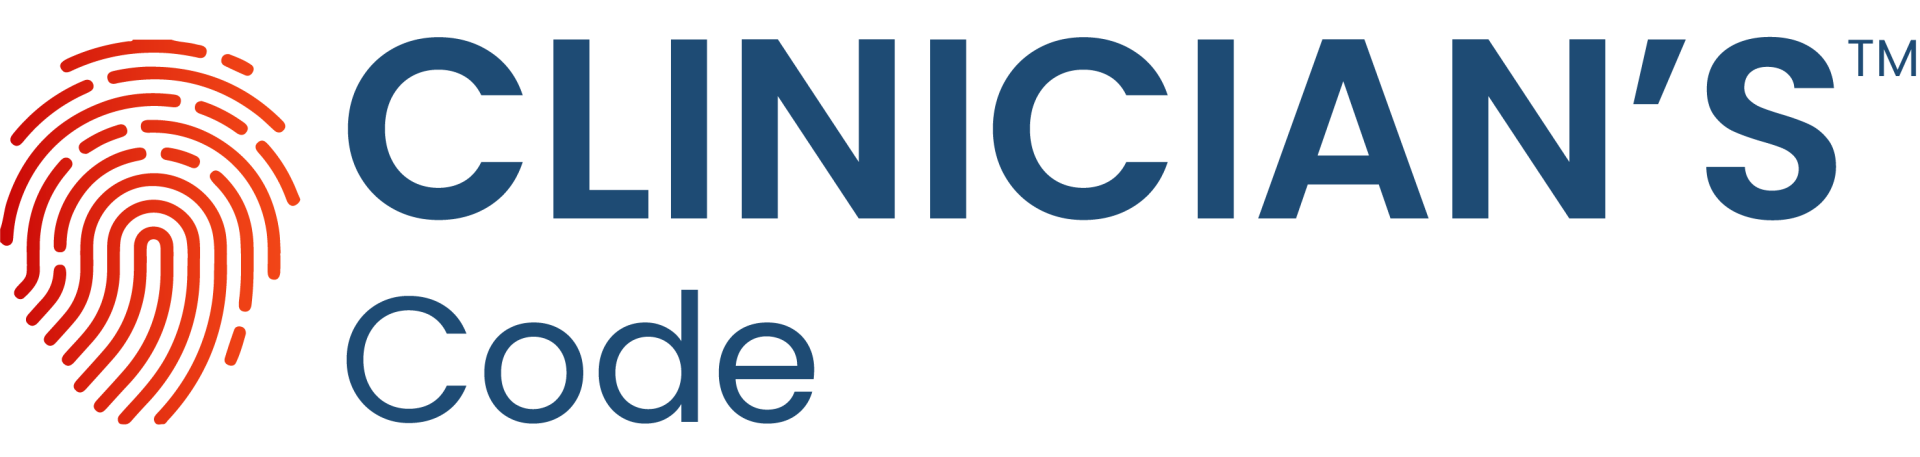 clinicians code logo